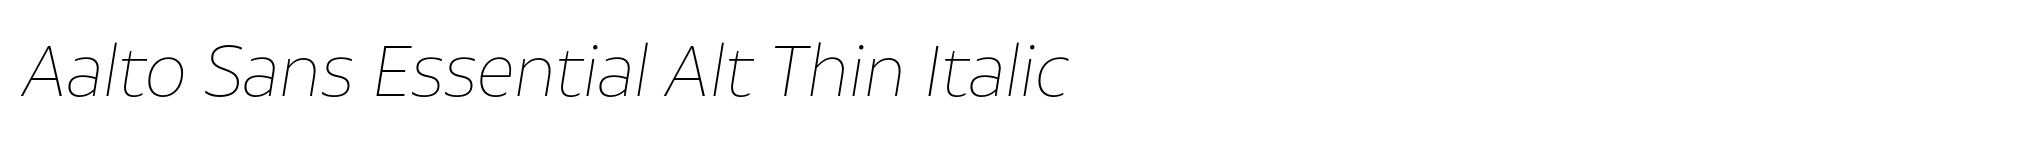 Aalto Sans Essential Alt Thin Italic image